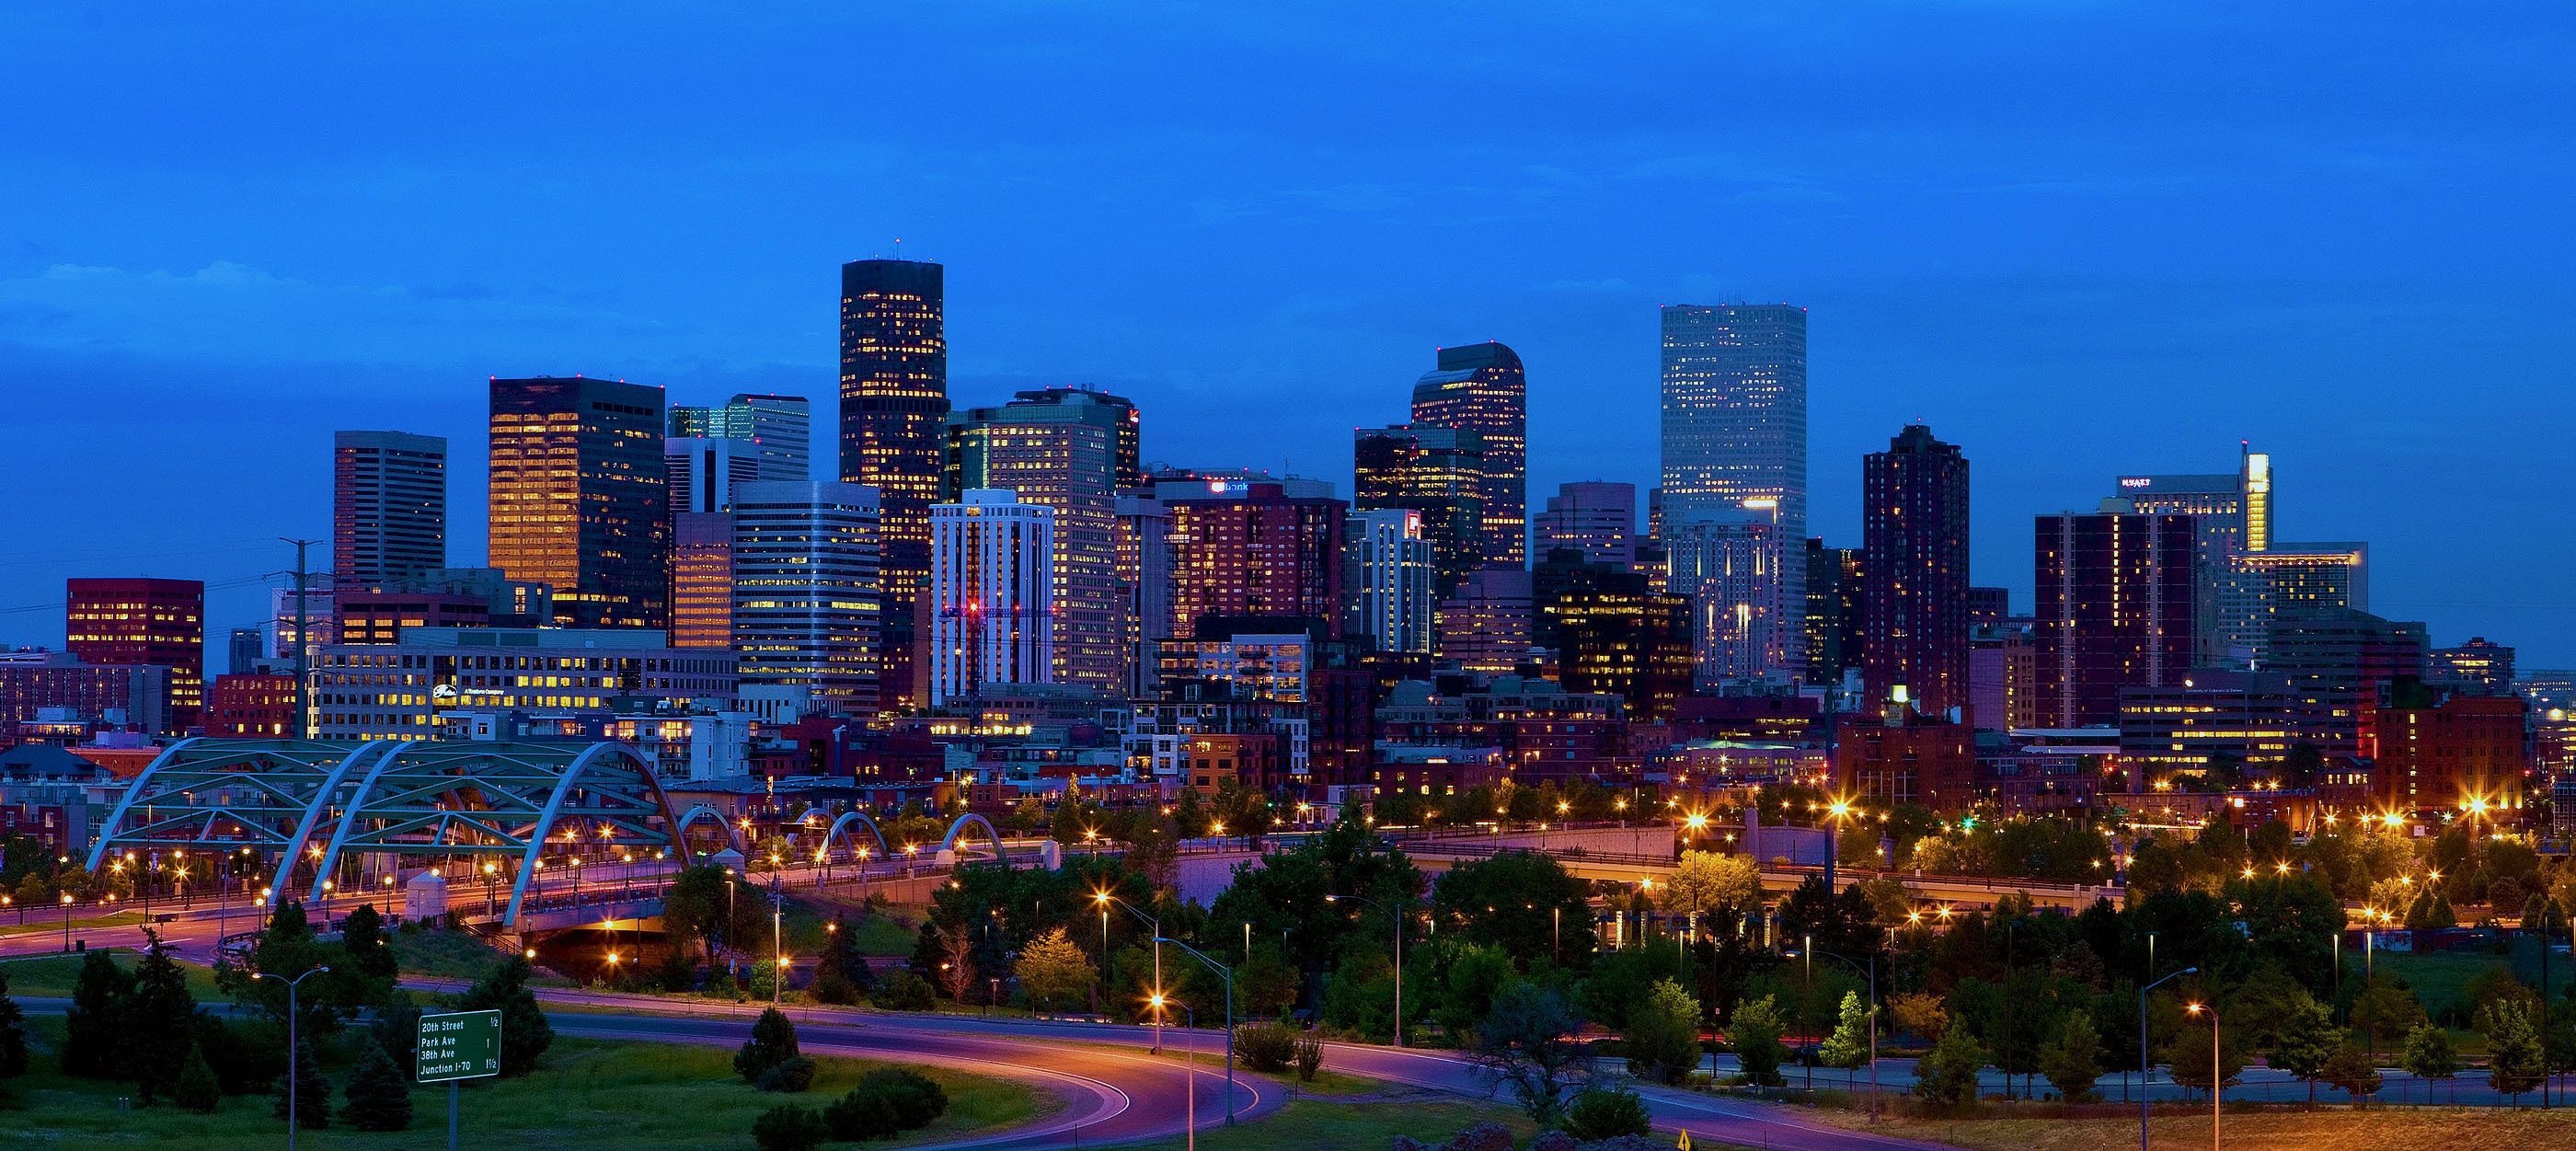 Denver travels, Stunning wallpapers, Free download, Denver, Colorado, 2800x1260 Dual Screen Desktop